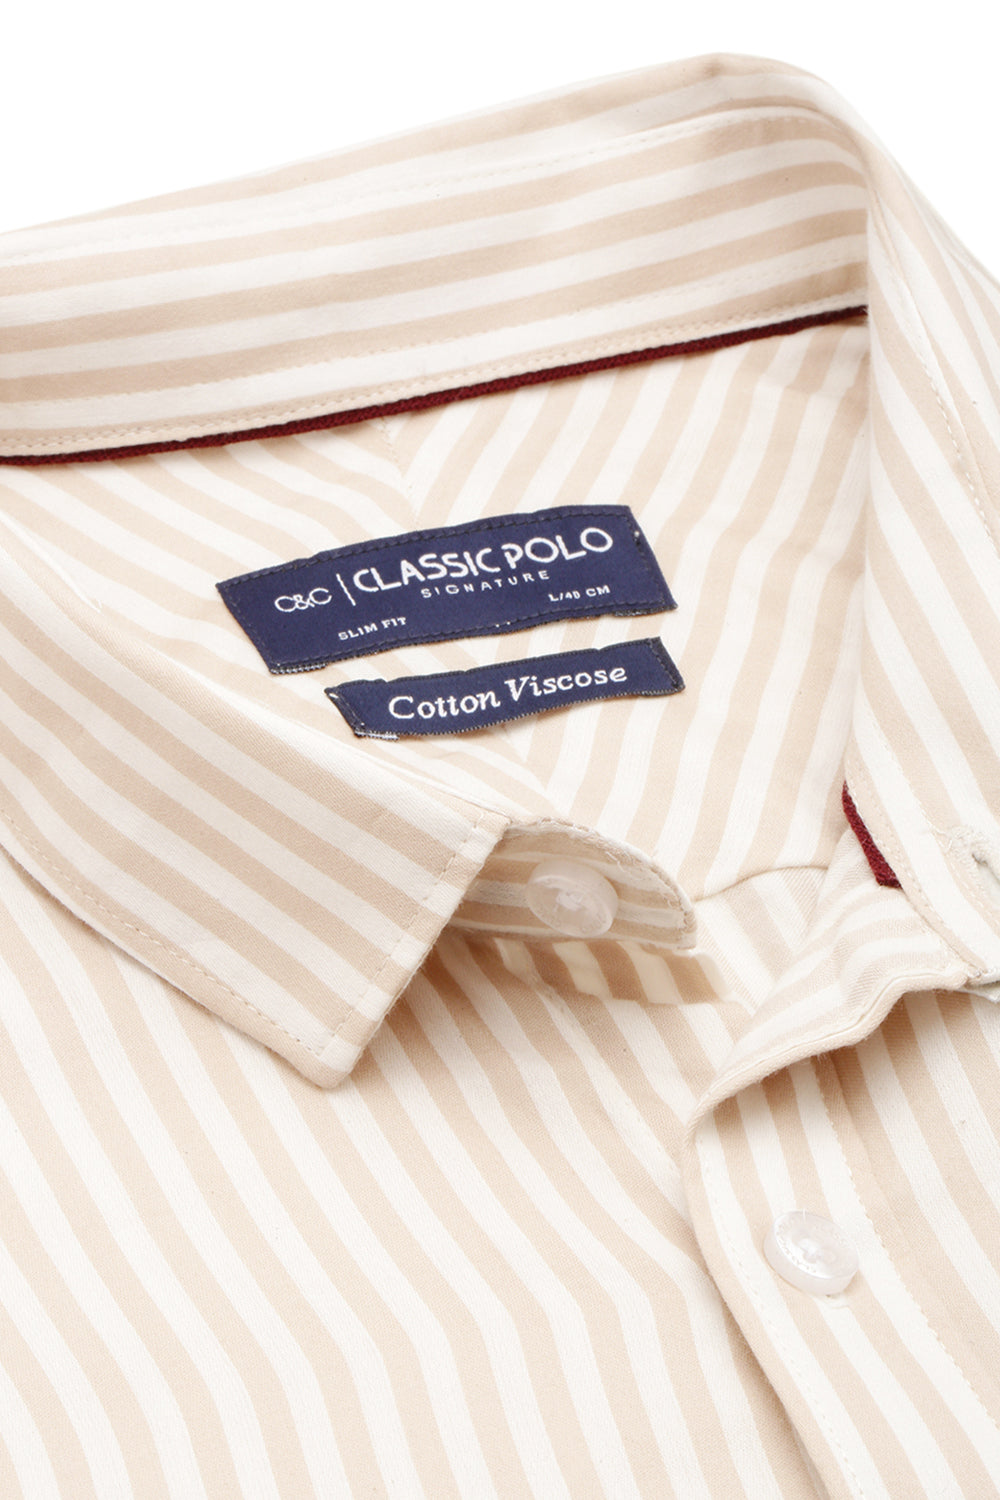 Classic Polo Men's Cotton Full Sleeve Striped Slim Fit Polo Neck Cream Color Woven Shirt | So1-104 A